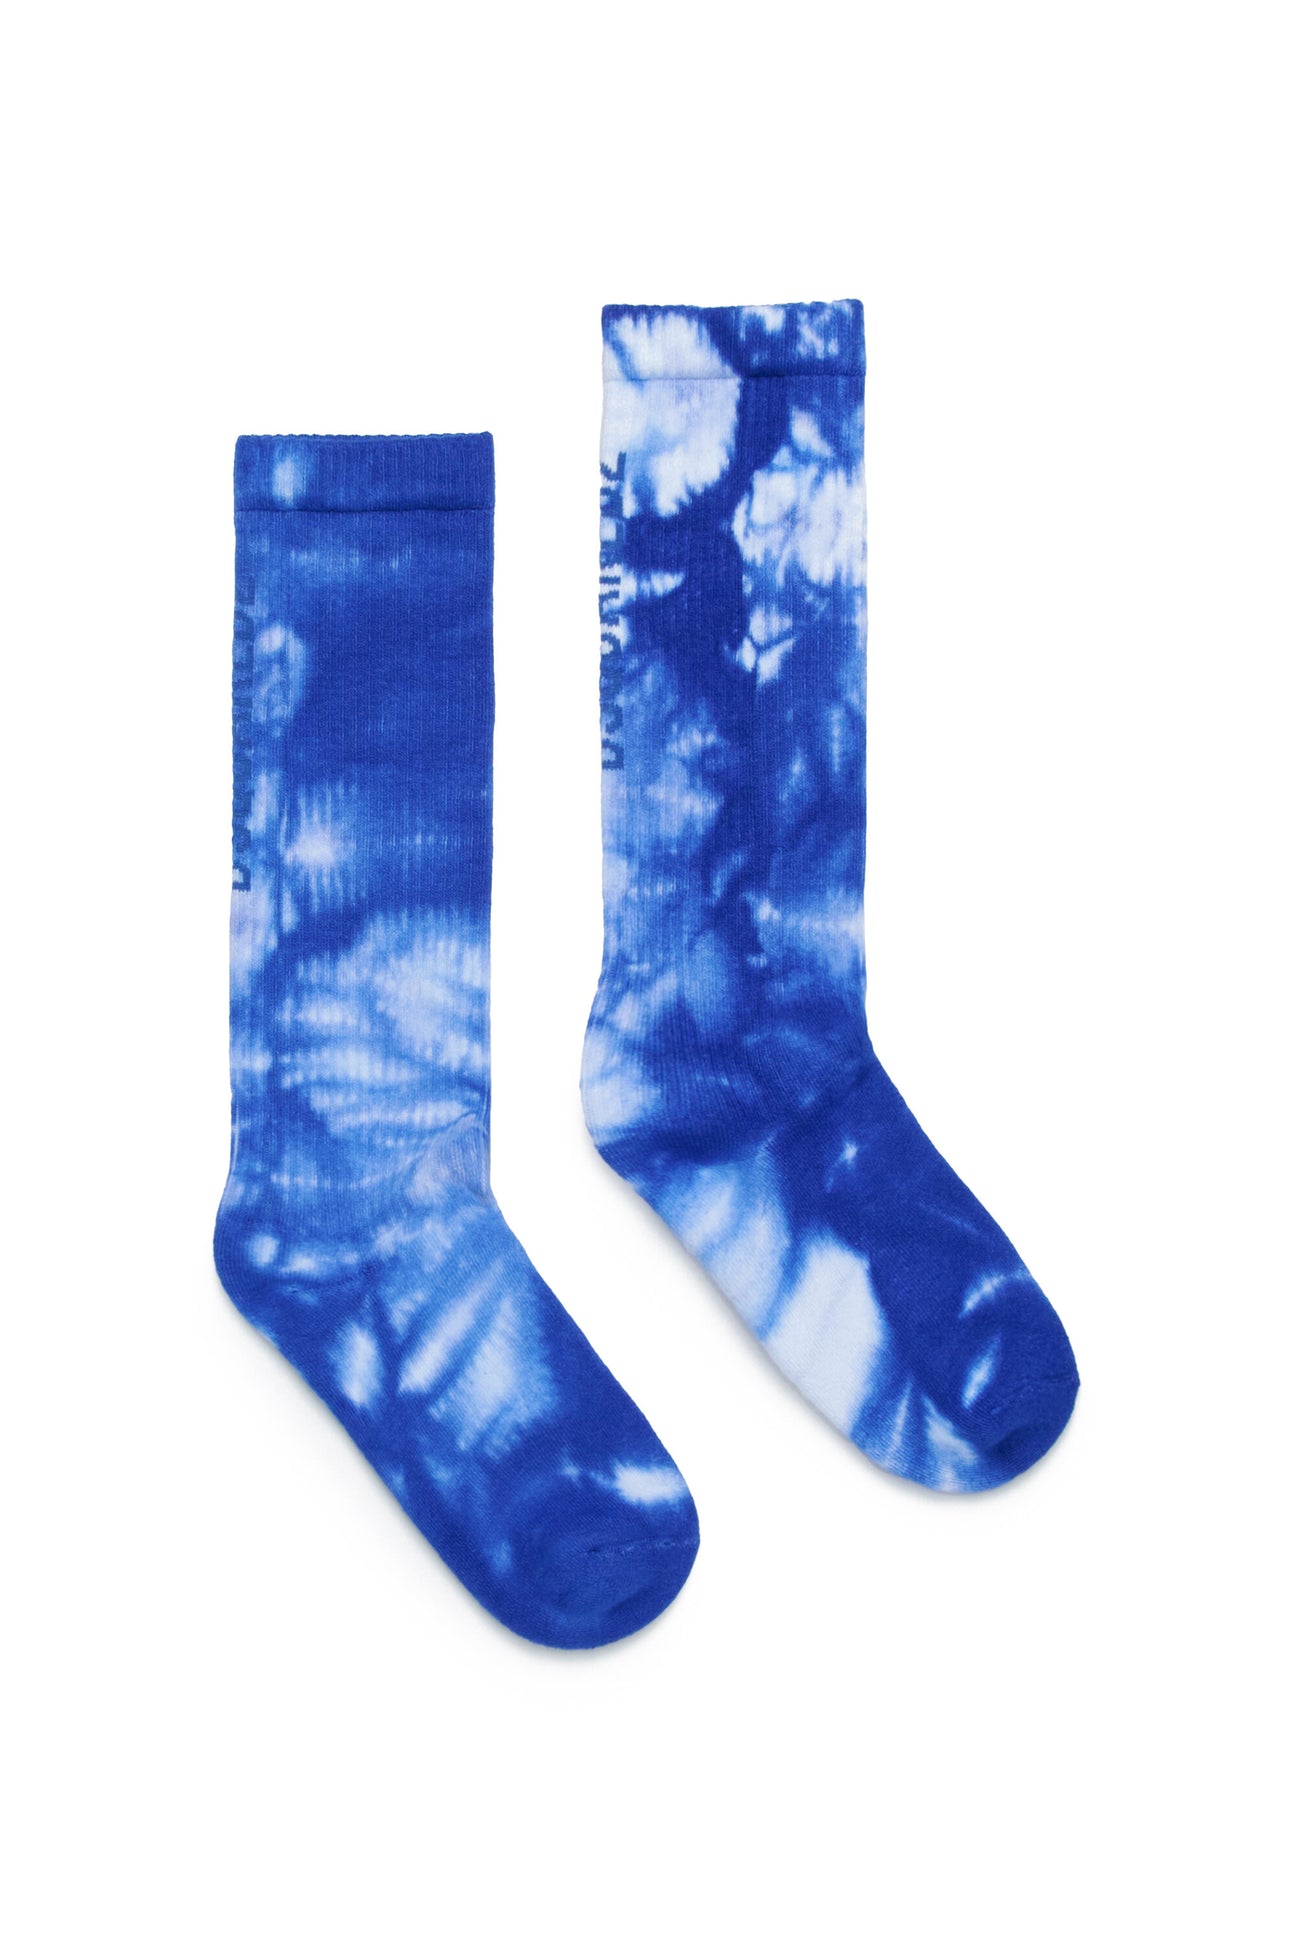 Cotton socks with tie-dye effect 